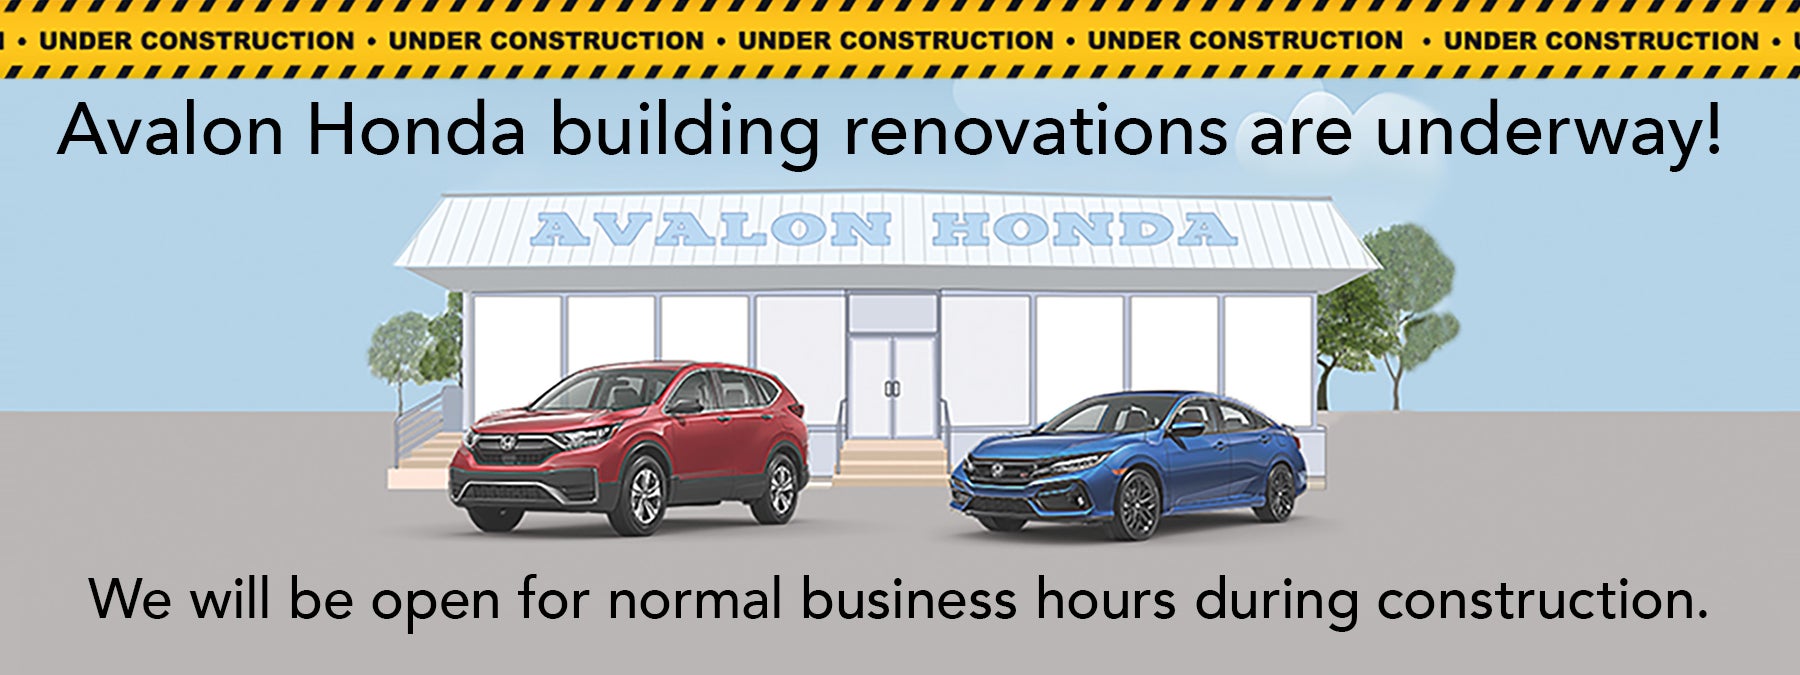 Avalon Honda Renovations